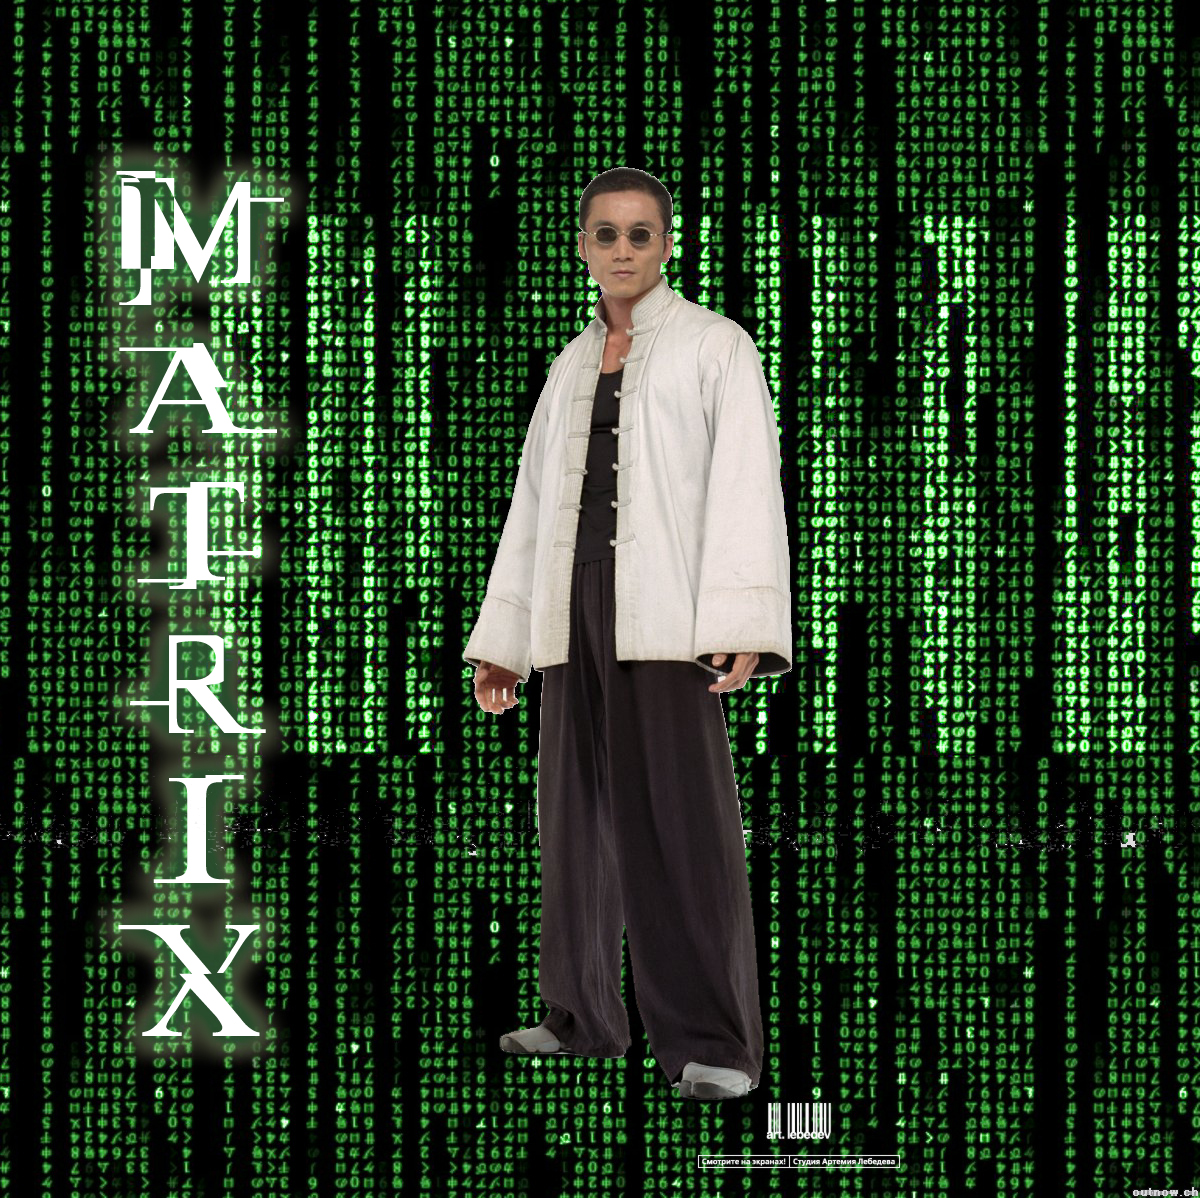 Download High quality Matrix wallpaper / Movies / 1200x1198